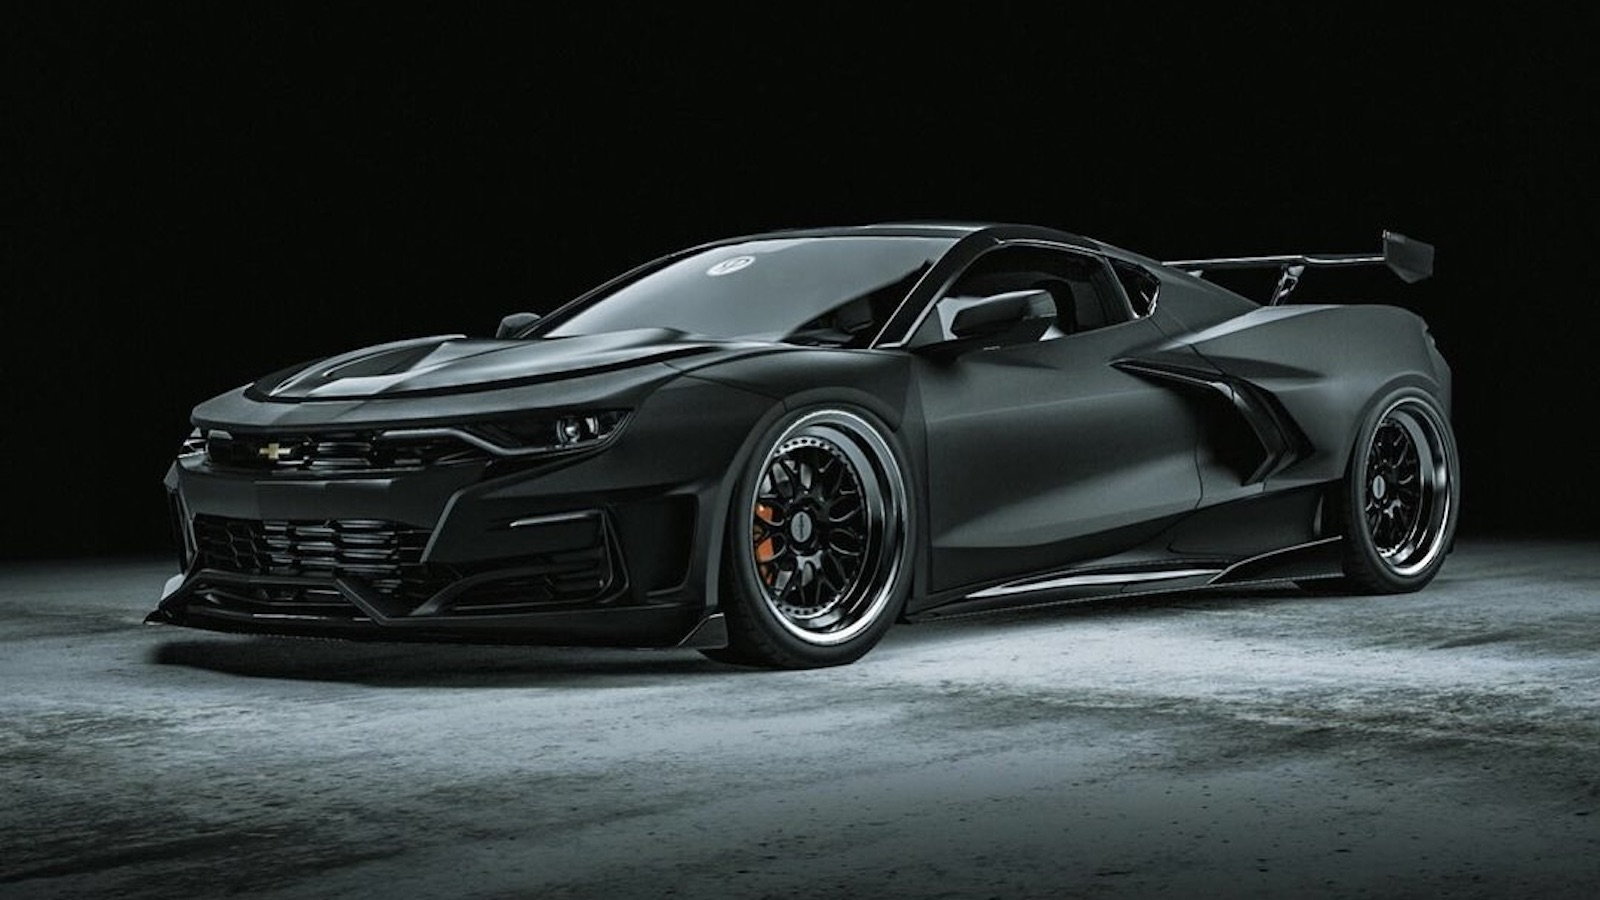 What If GM Built a Corvette-Inspired Mid-Engine Camaro? | Corvetteforum